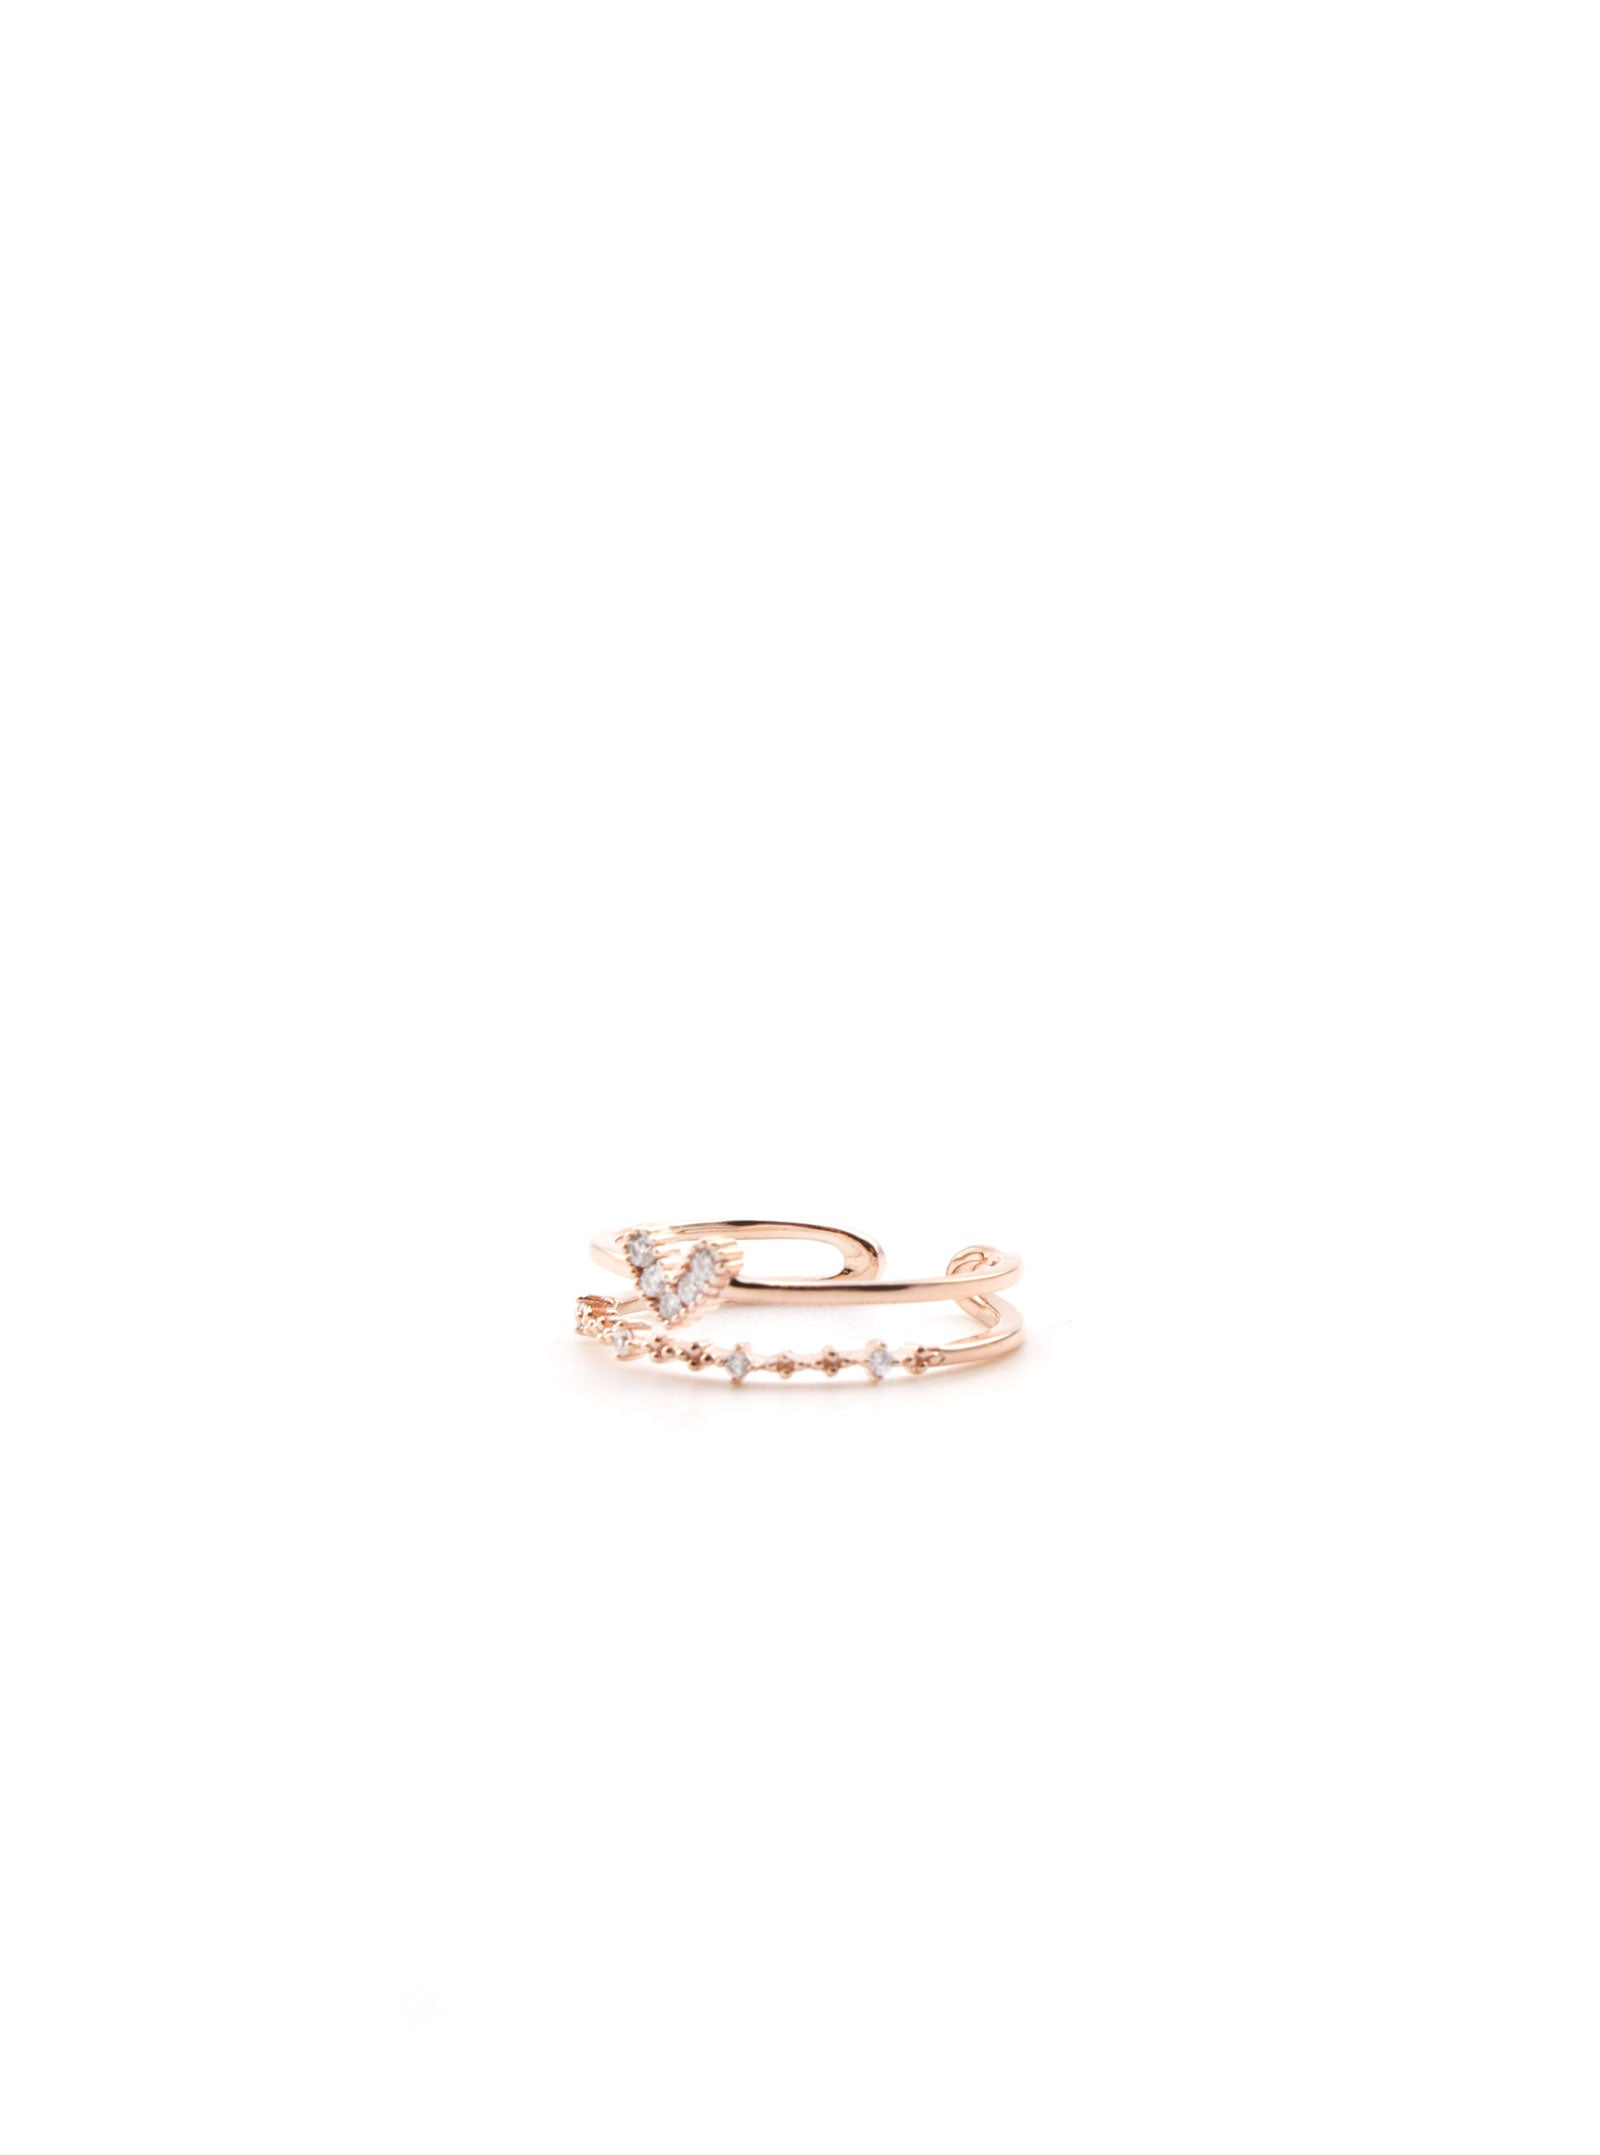 Rosemay Silver Ring - Simplique Mode